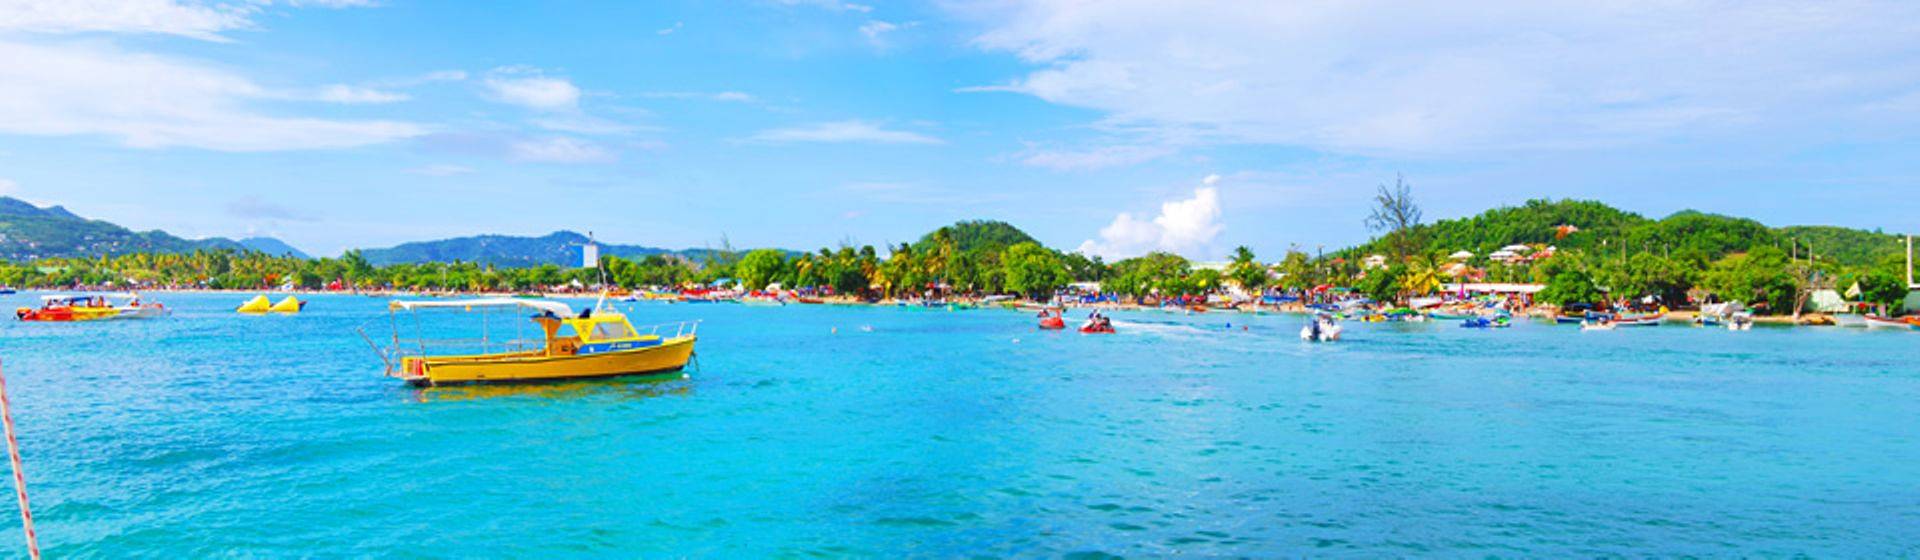 Holidays to Martinique Image